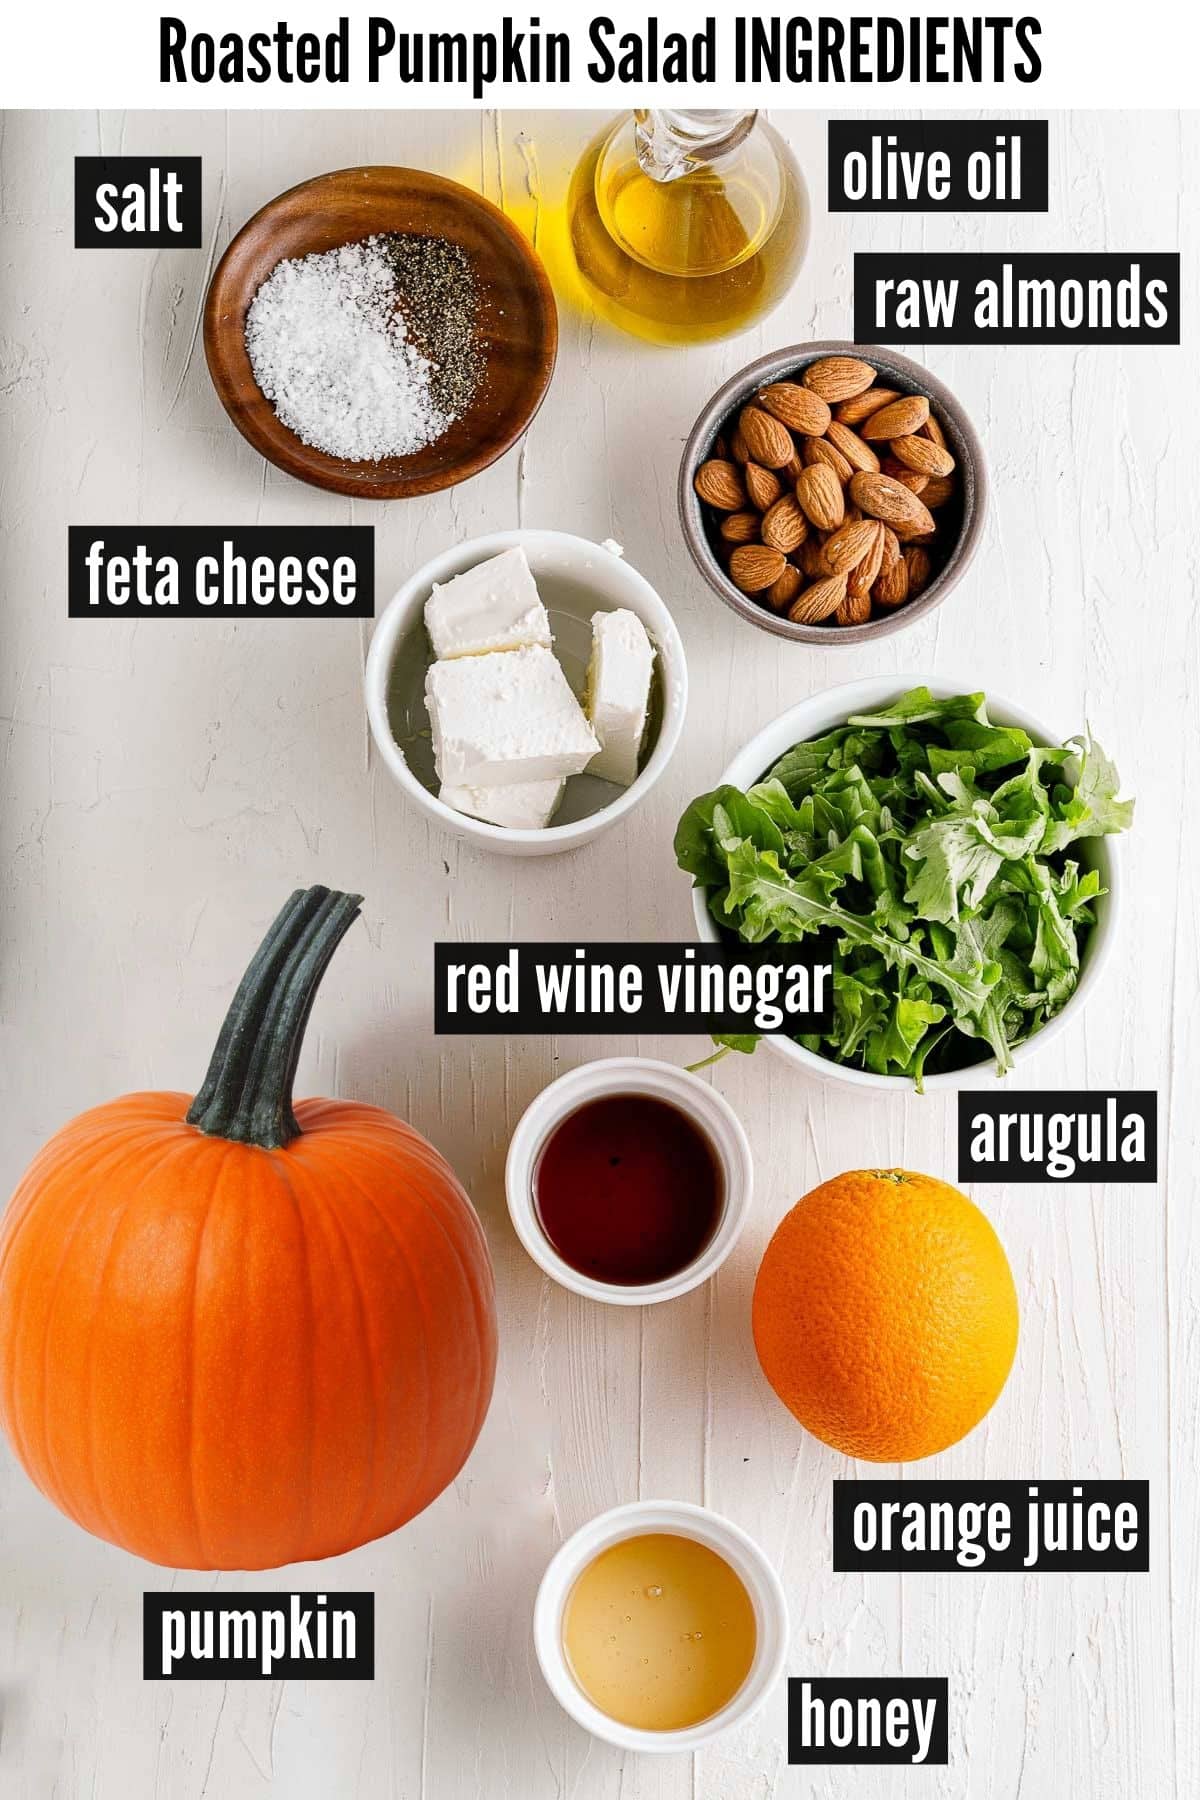 roasted pumpkin salad labelled ingredients